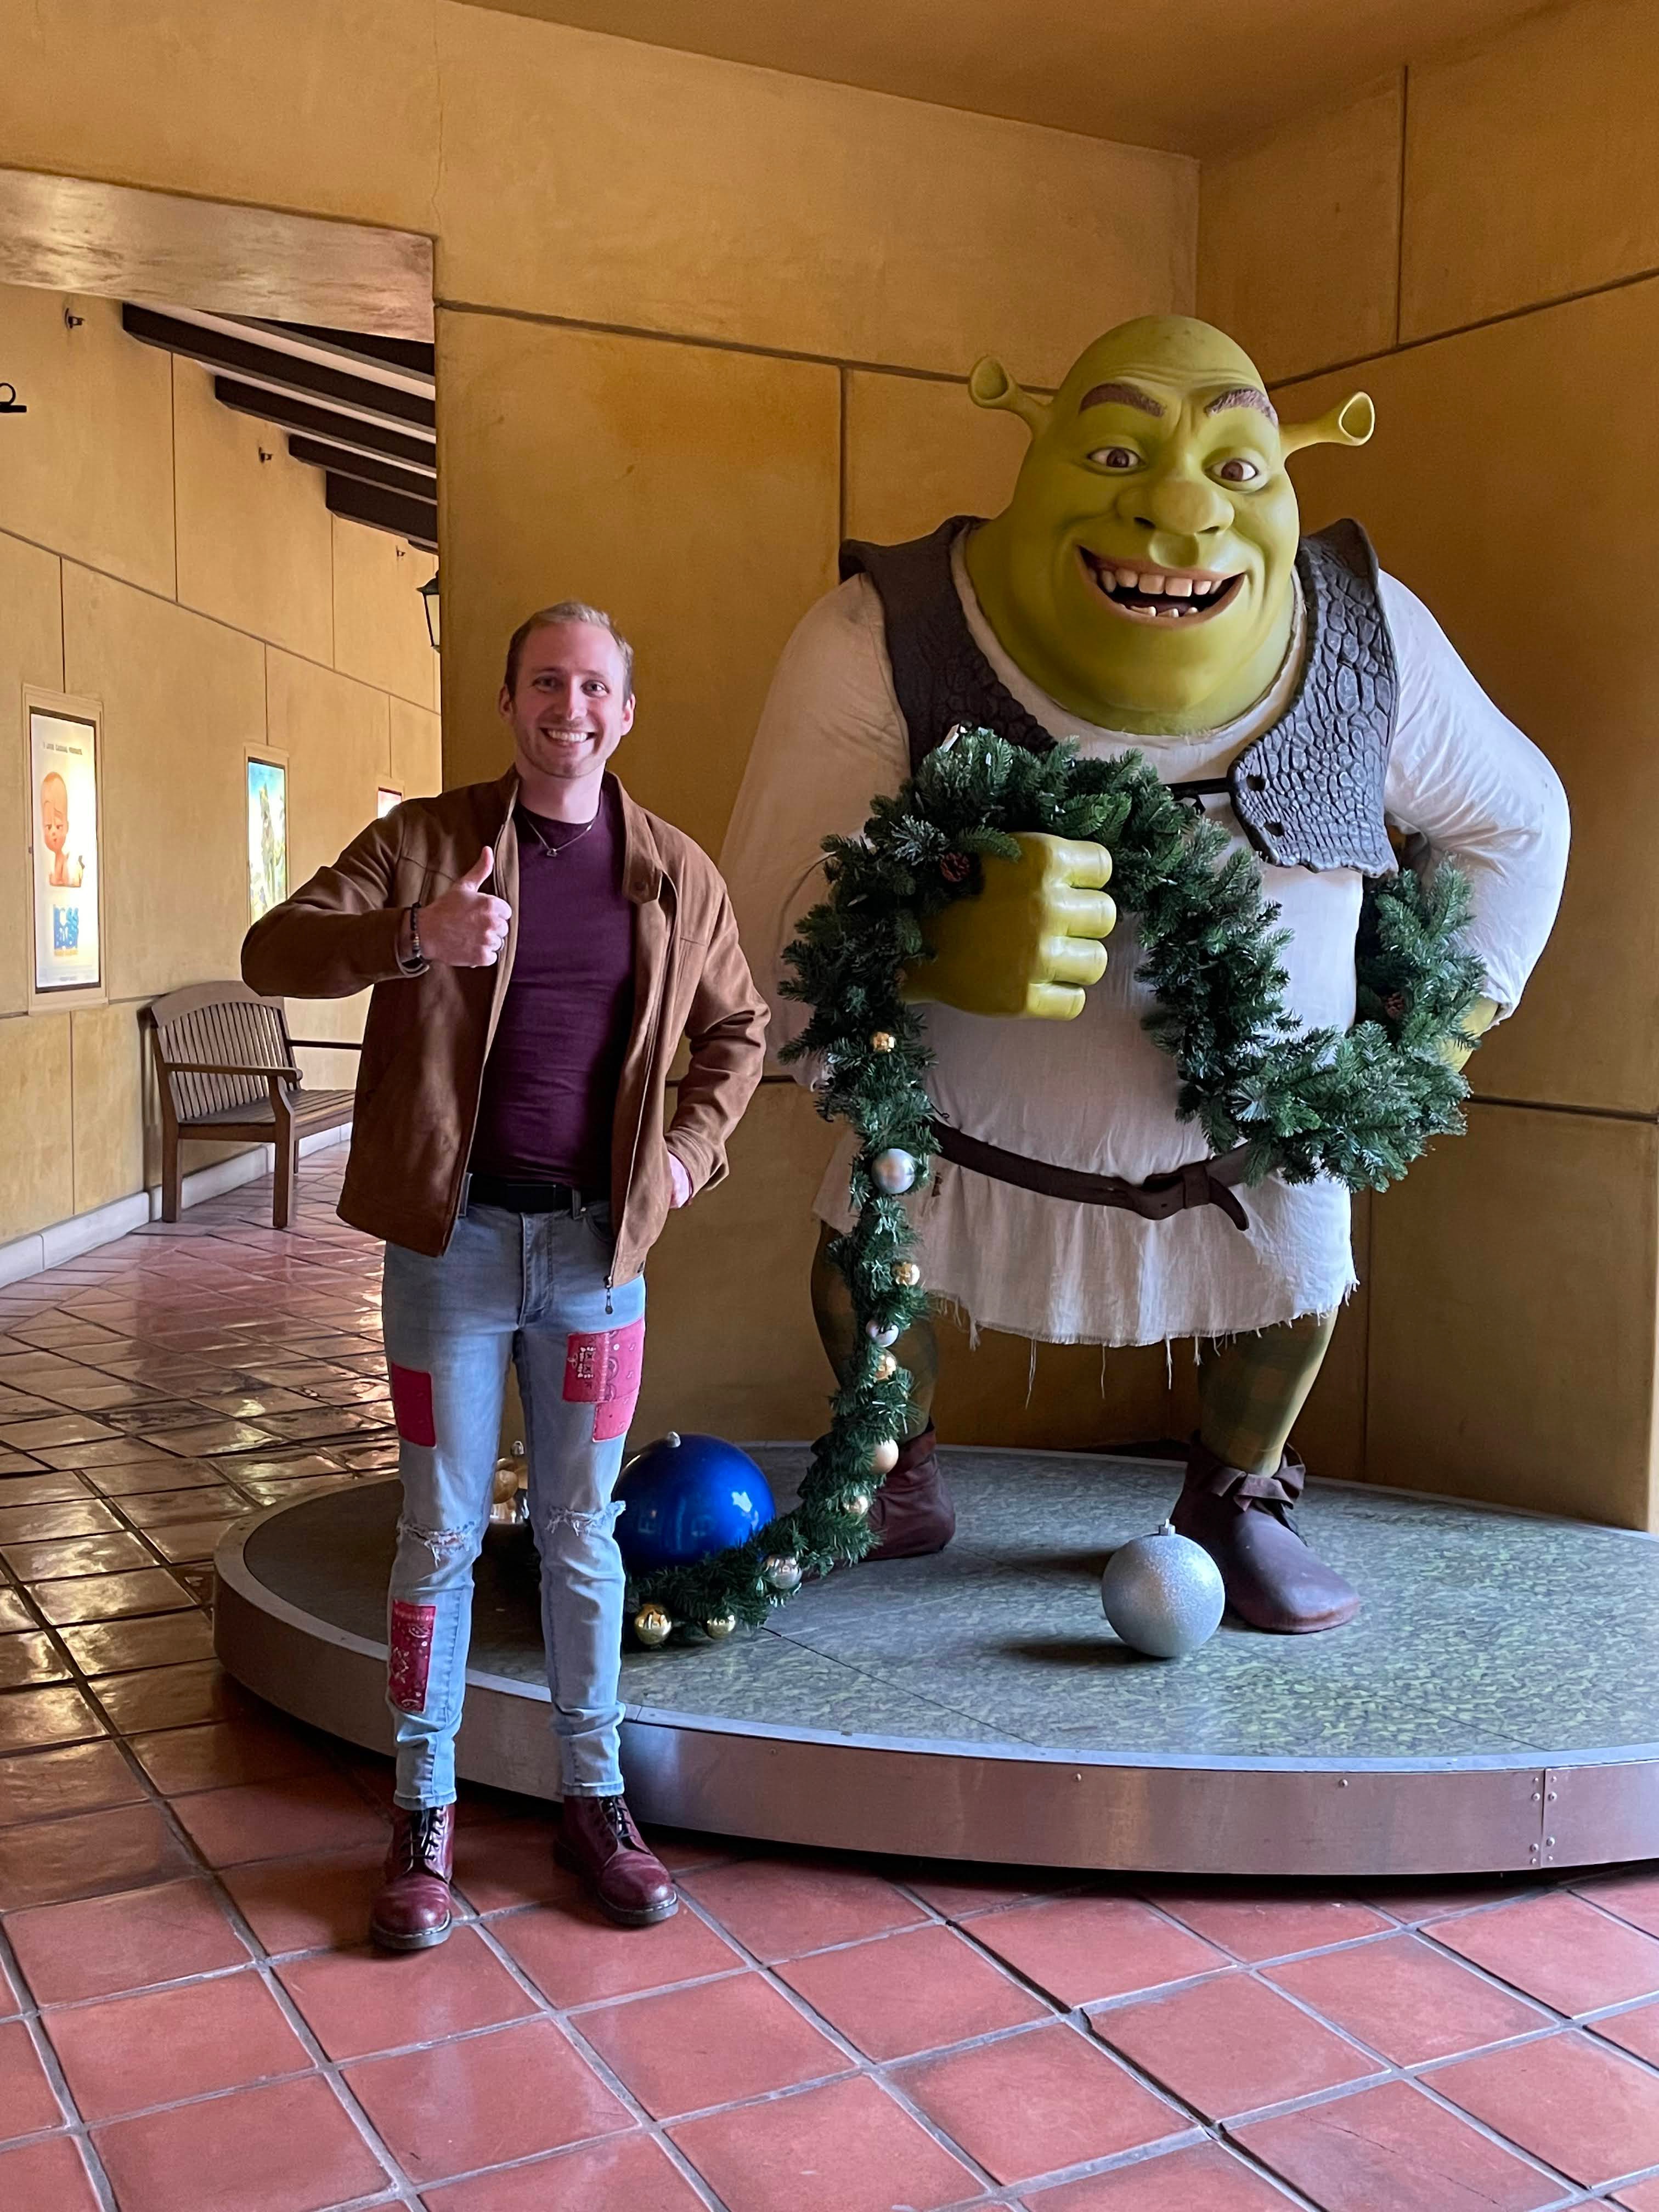 Joey strikes a pose with Shrek at DreamWorks